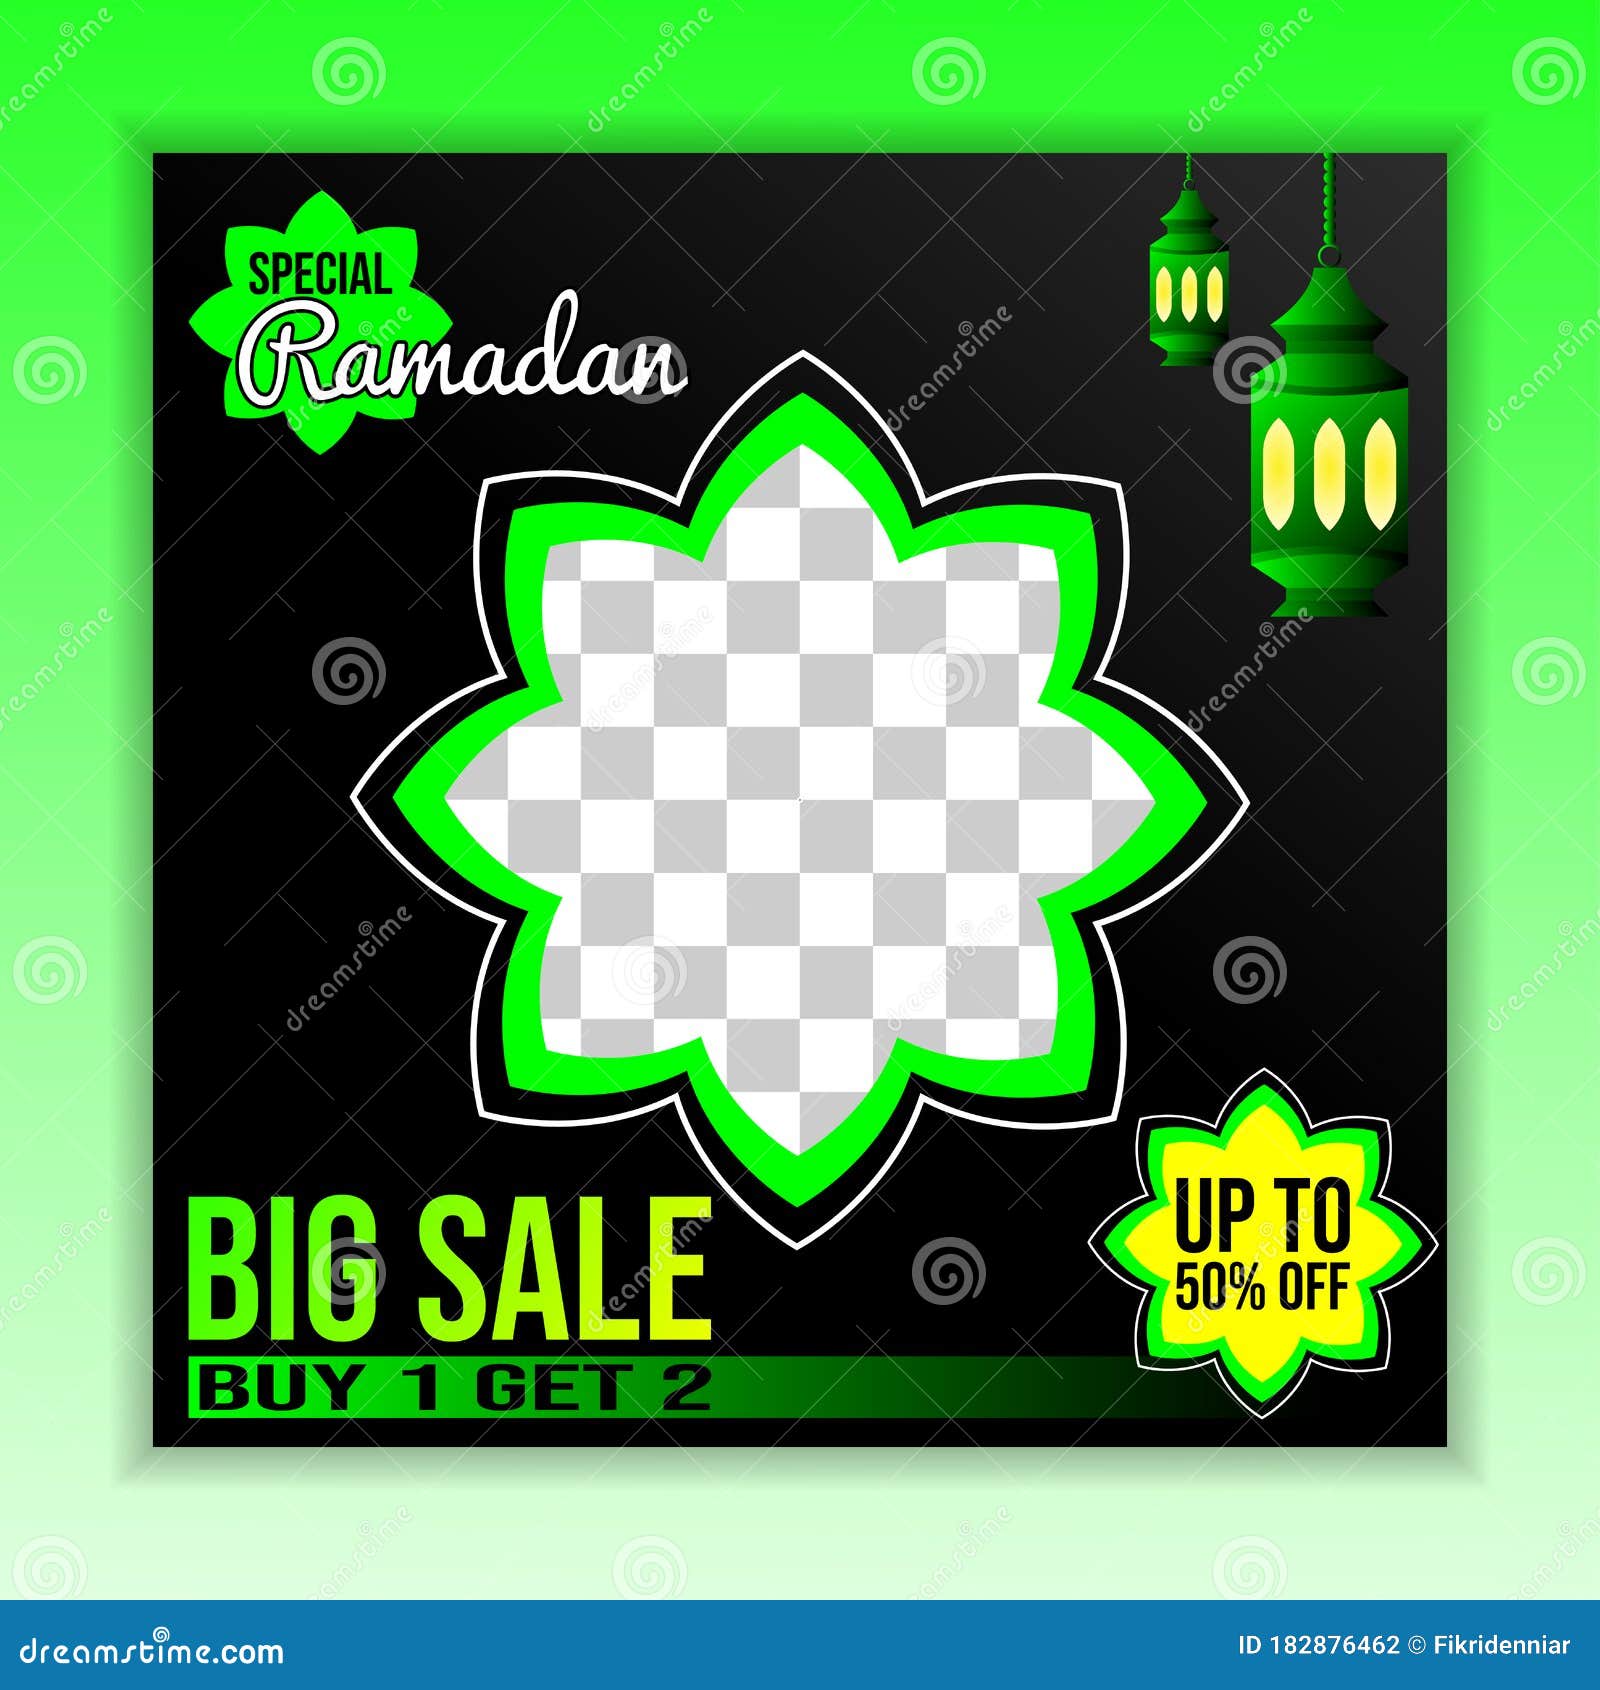 Ramadan Sale Social Media Post Template Banners Ad Editable Vector